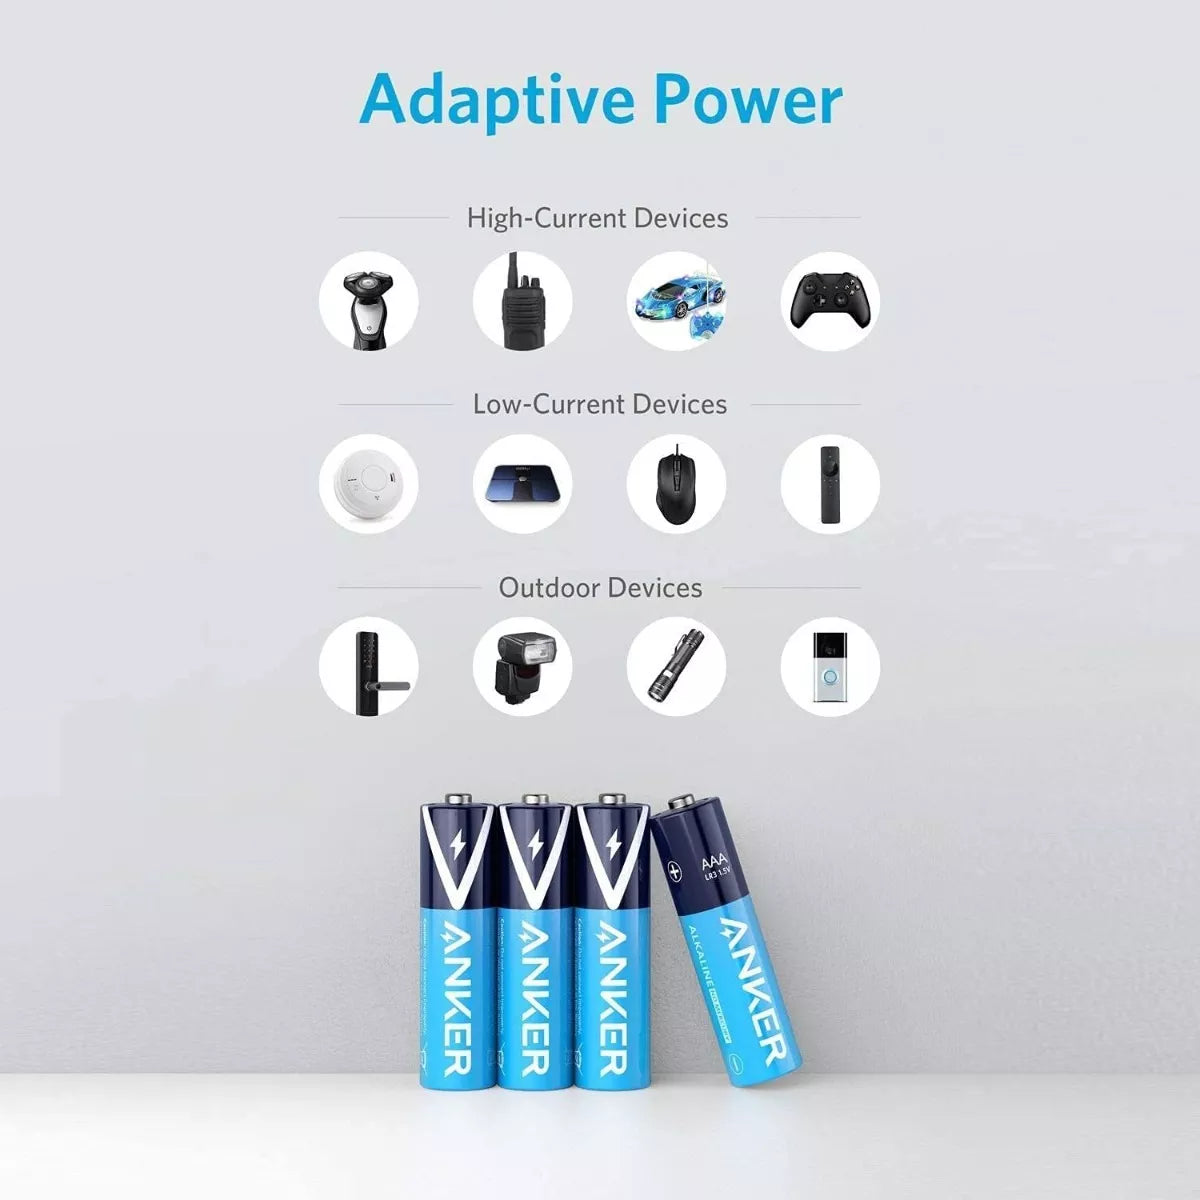 Anker AAA Alkaline Batteries 8-pack